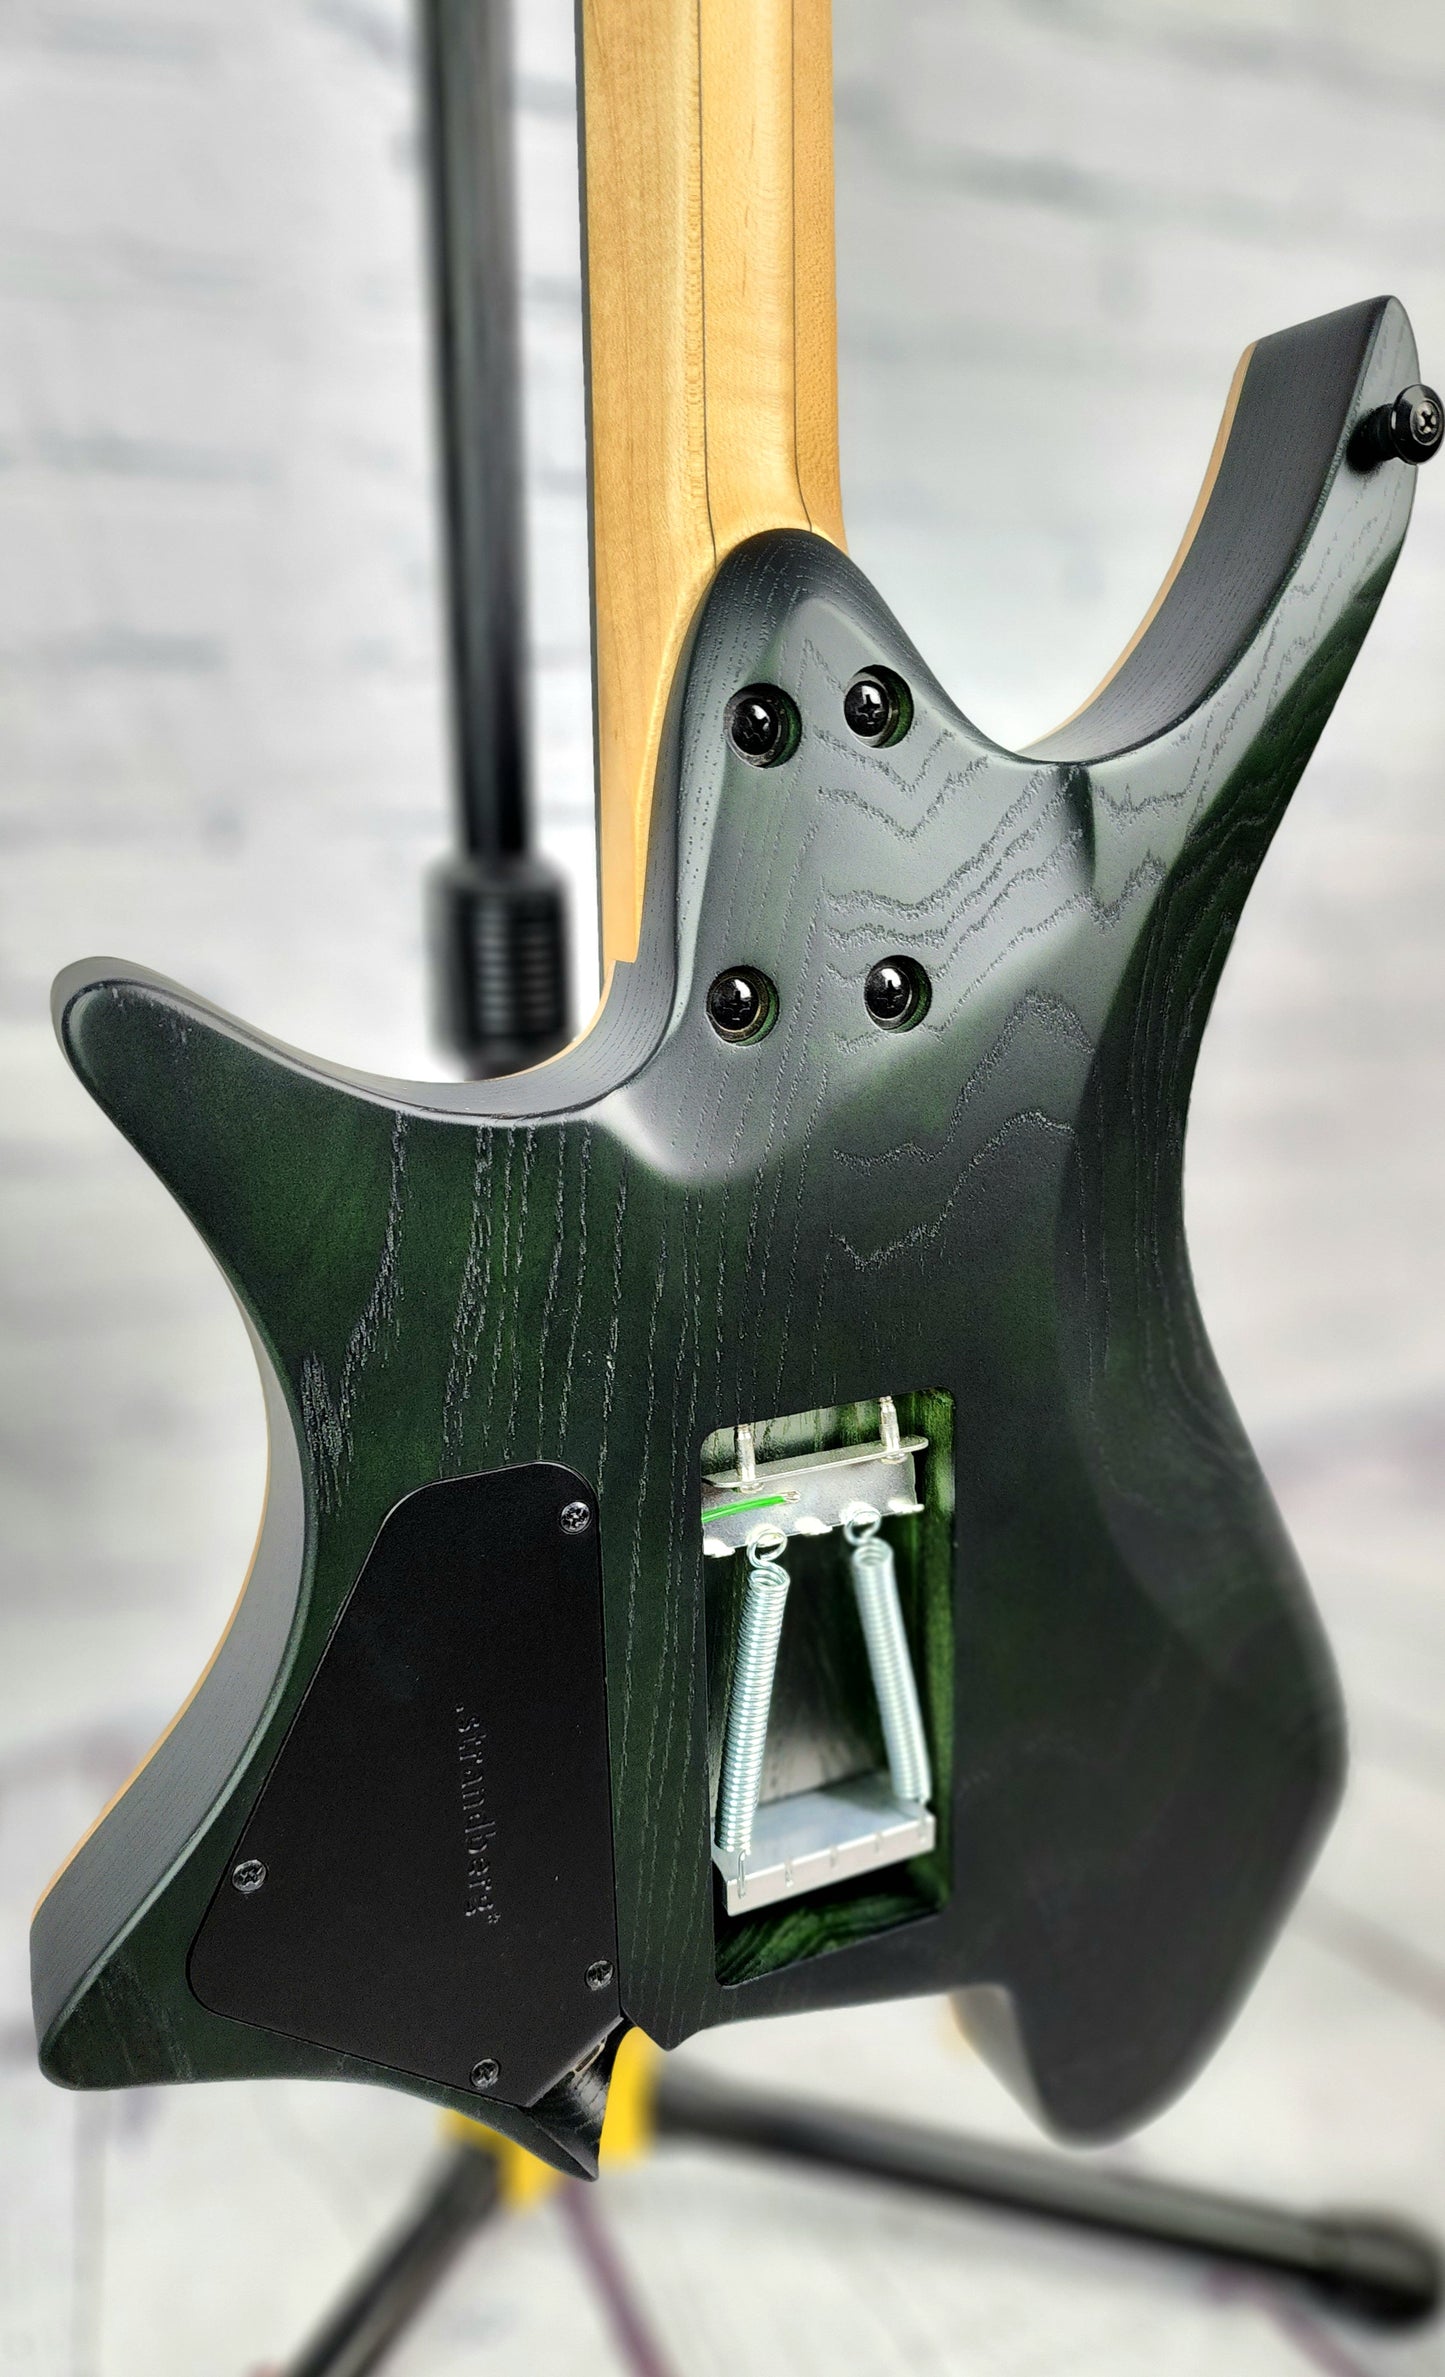 Strandberg Boden Prog NX 6 String Electric Guitar Earth Green